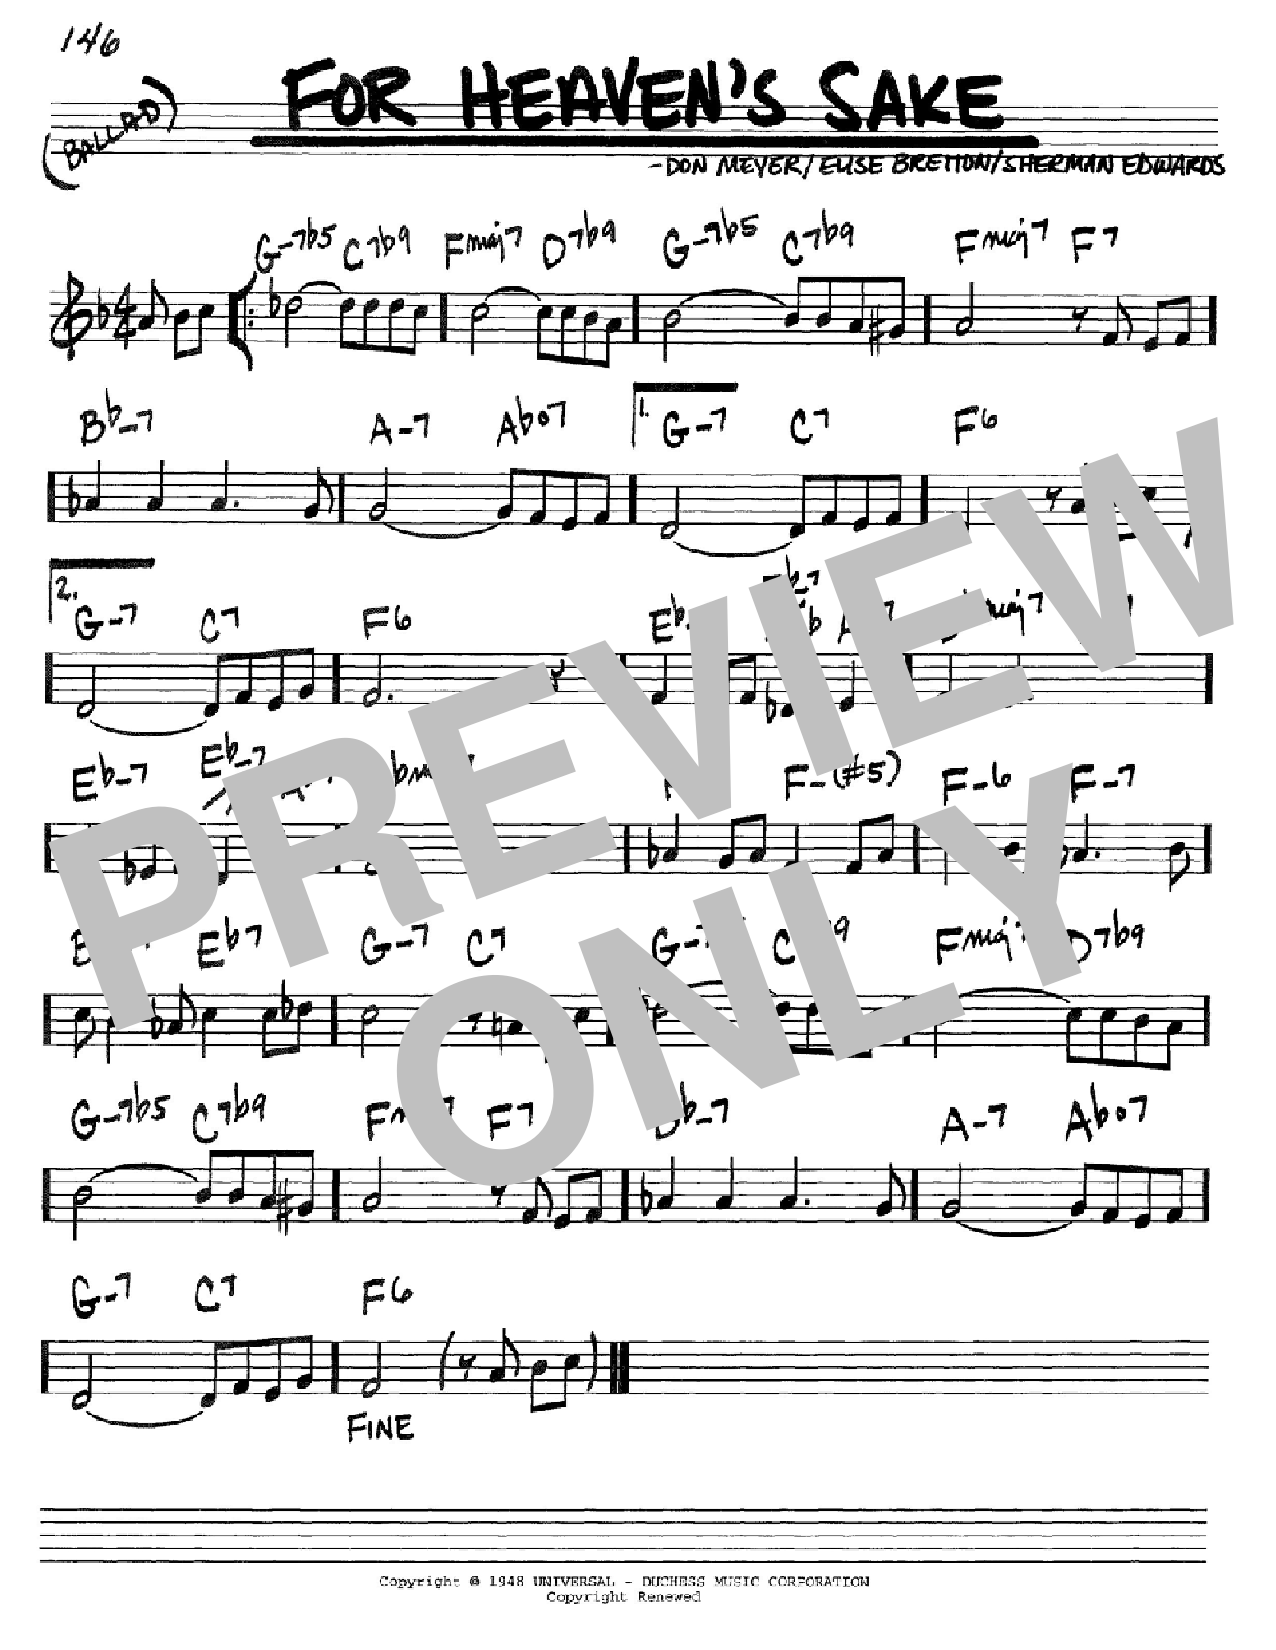 Bill Evans For Heaven's Sake Sheet Music Notes & Chords for Guitar Tab - Download or Print PDF